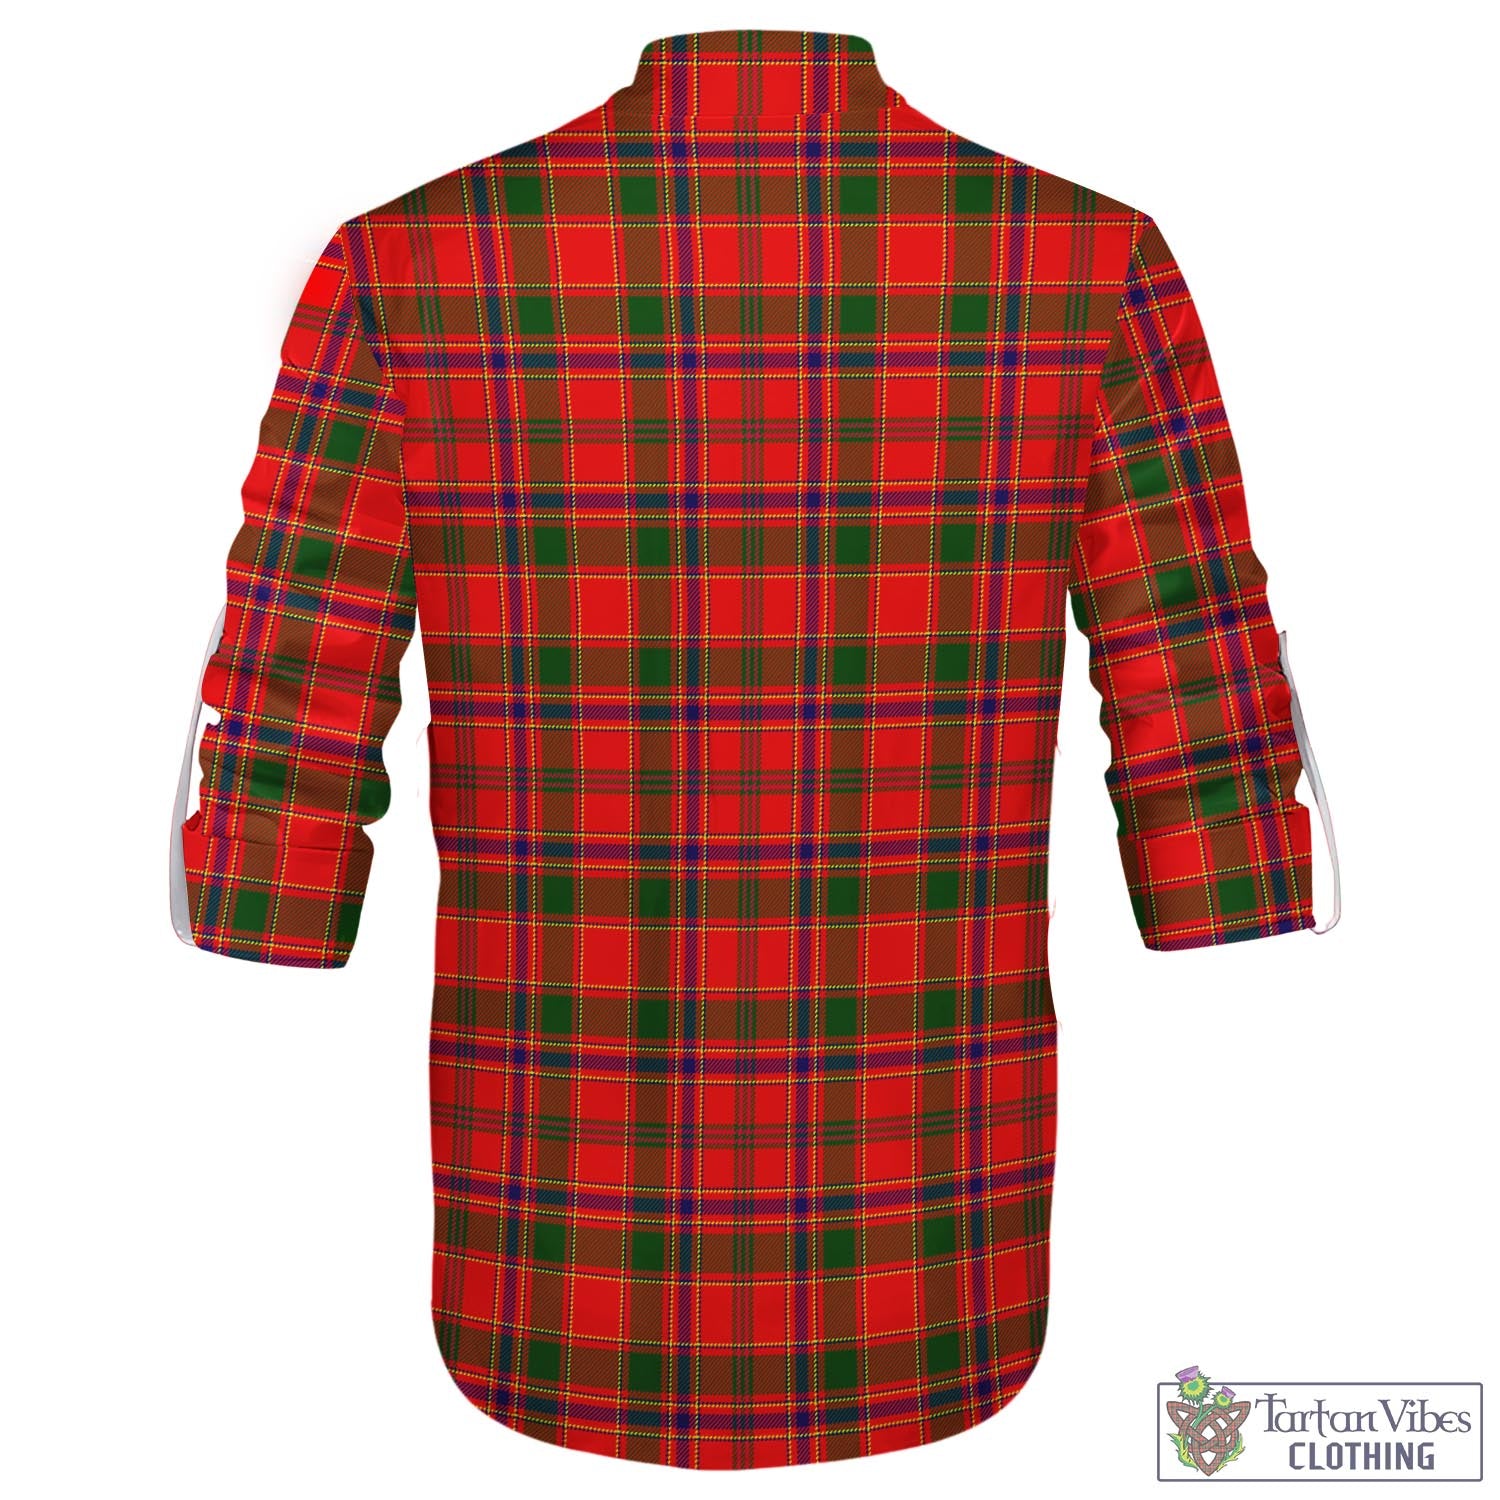 Tartan Vibes Clothing Munro Modern Tartan Men's Scottish Traditional Jacobite Ghillie Kilt Shirt with Family Crest